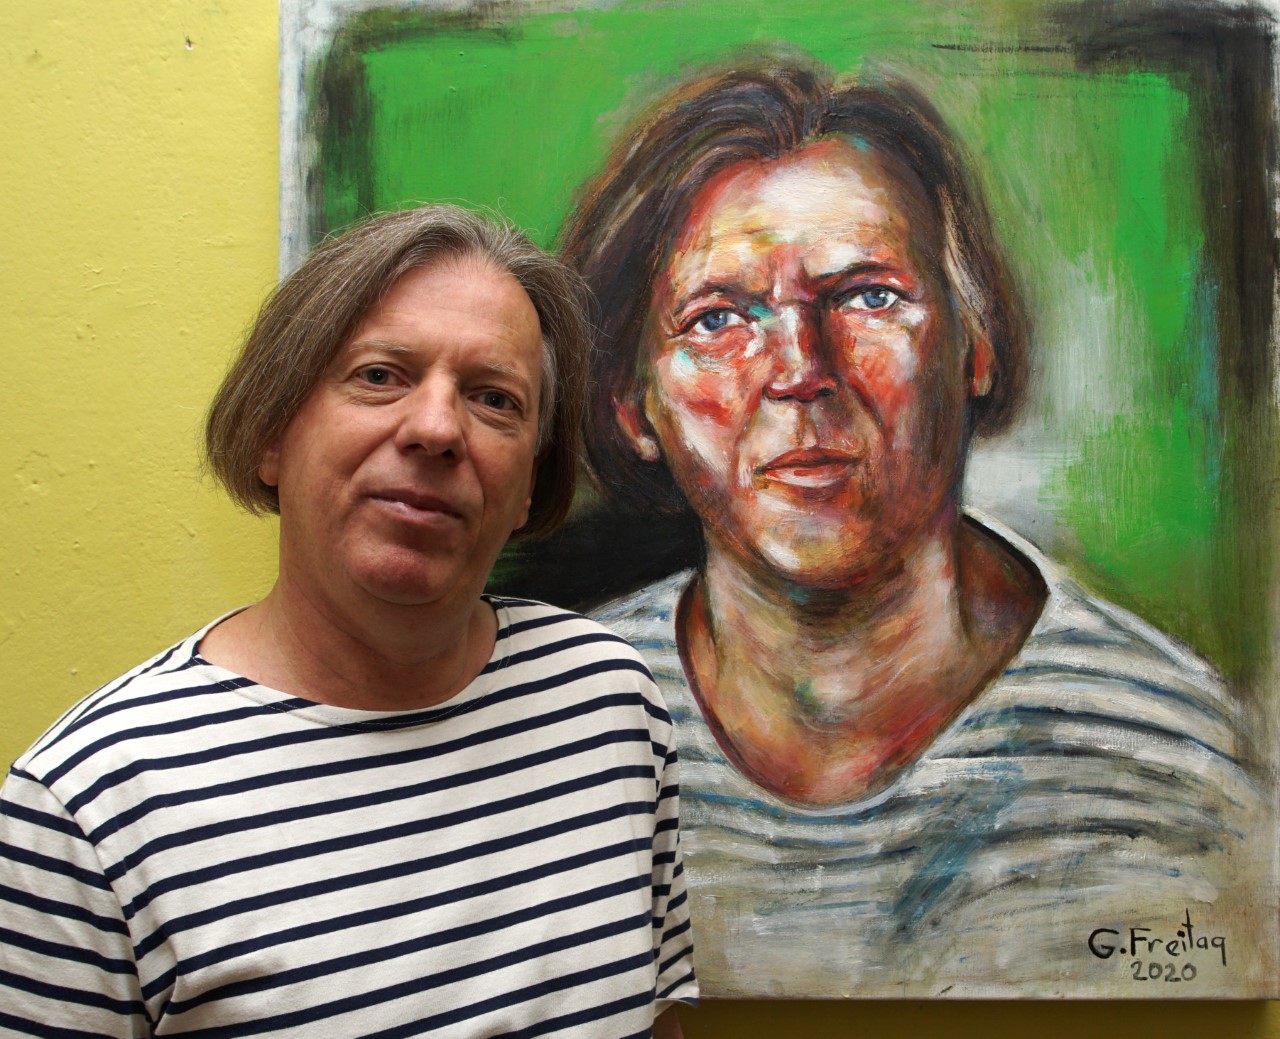 Media austriake e vlerëson piktorin shqiptar Gazmend Freitag